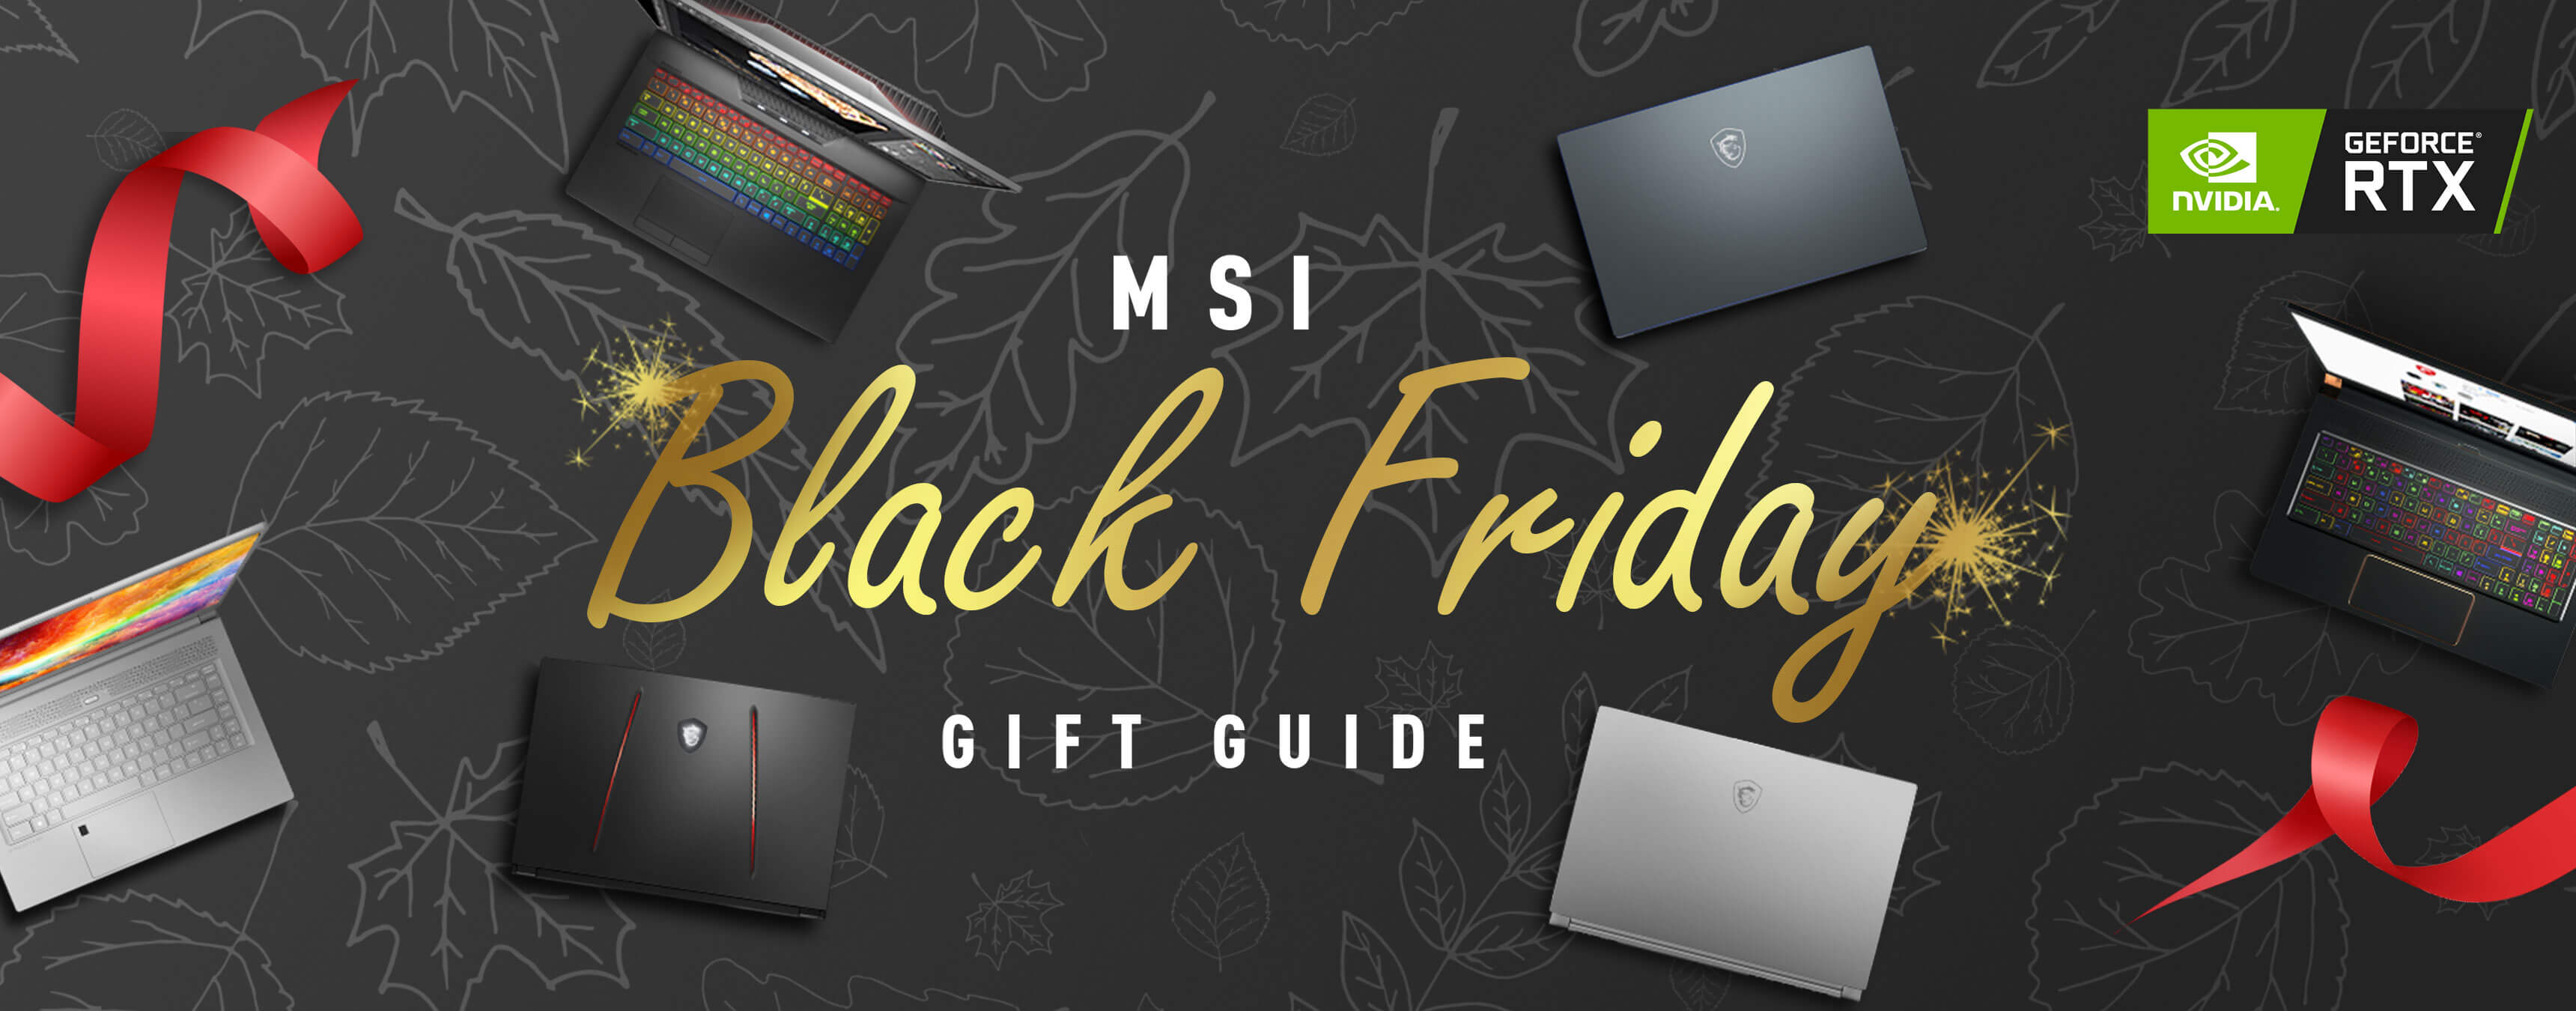 MSI Black Friday Deals - Does Msi Do Black Friday Deals